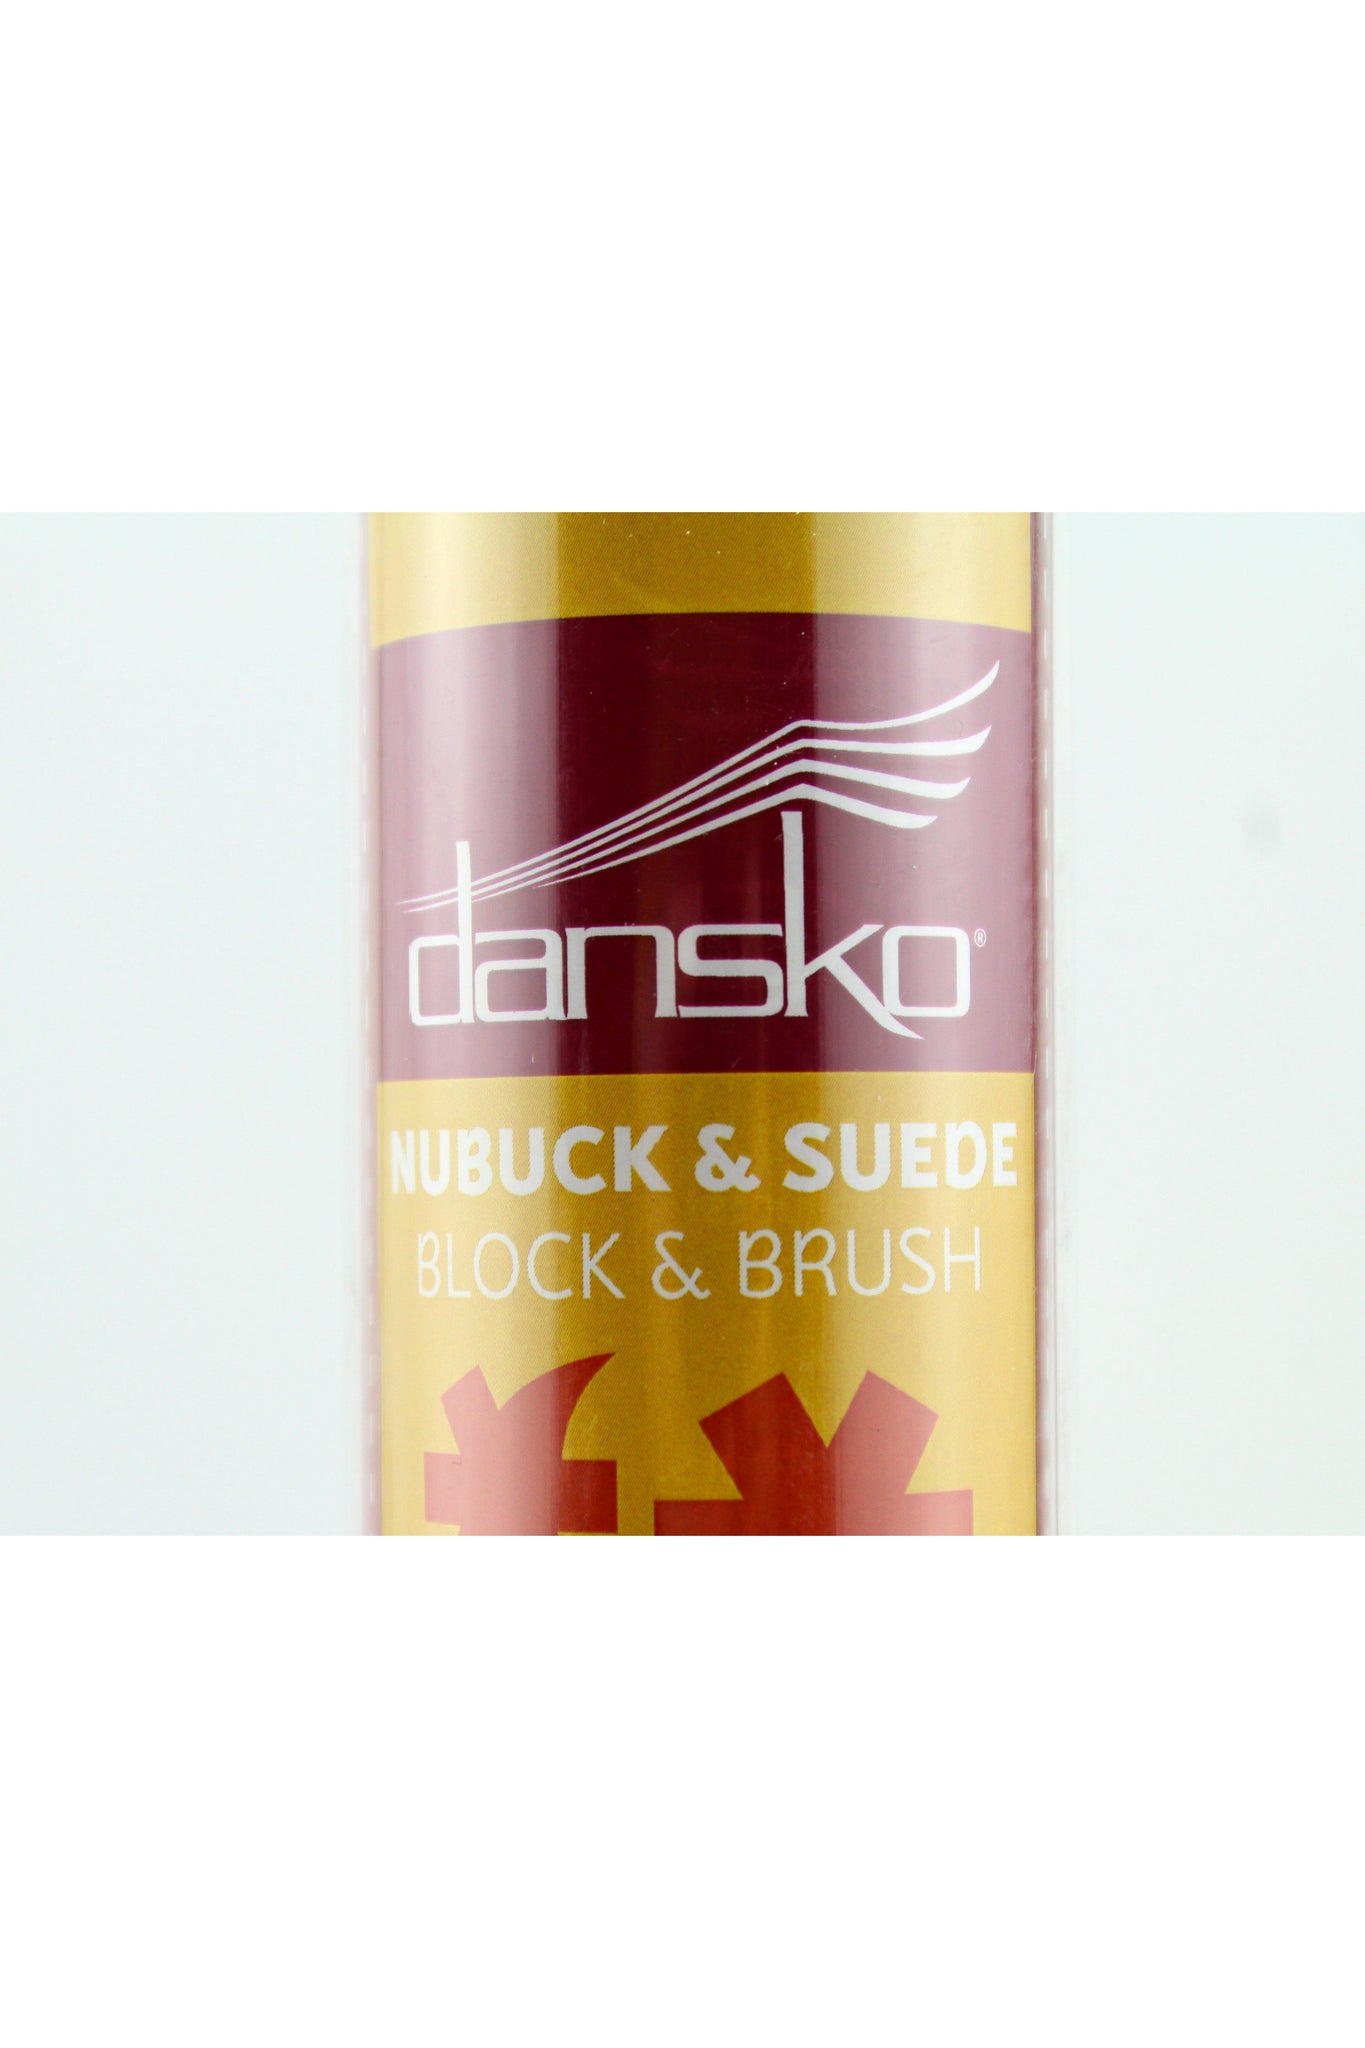 Dansko Nubuck & Suede Block & Brush